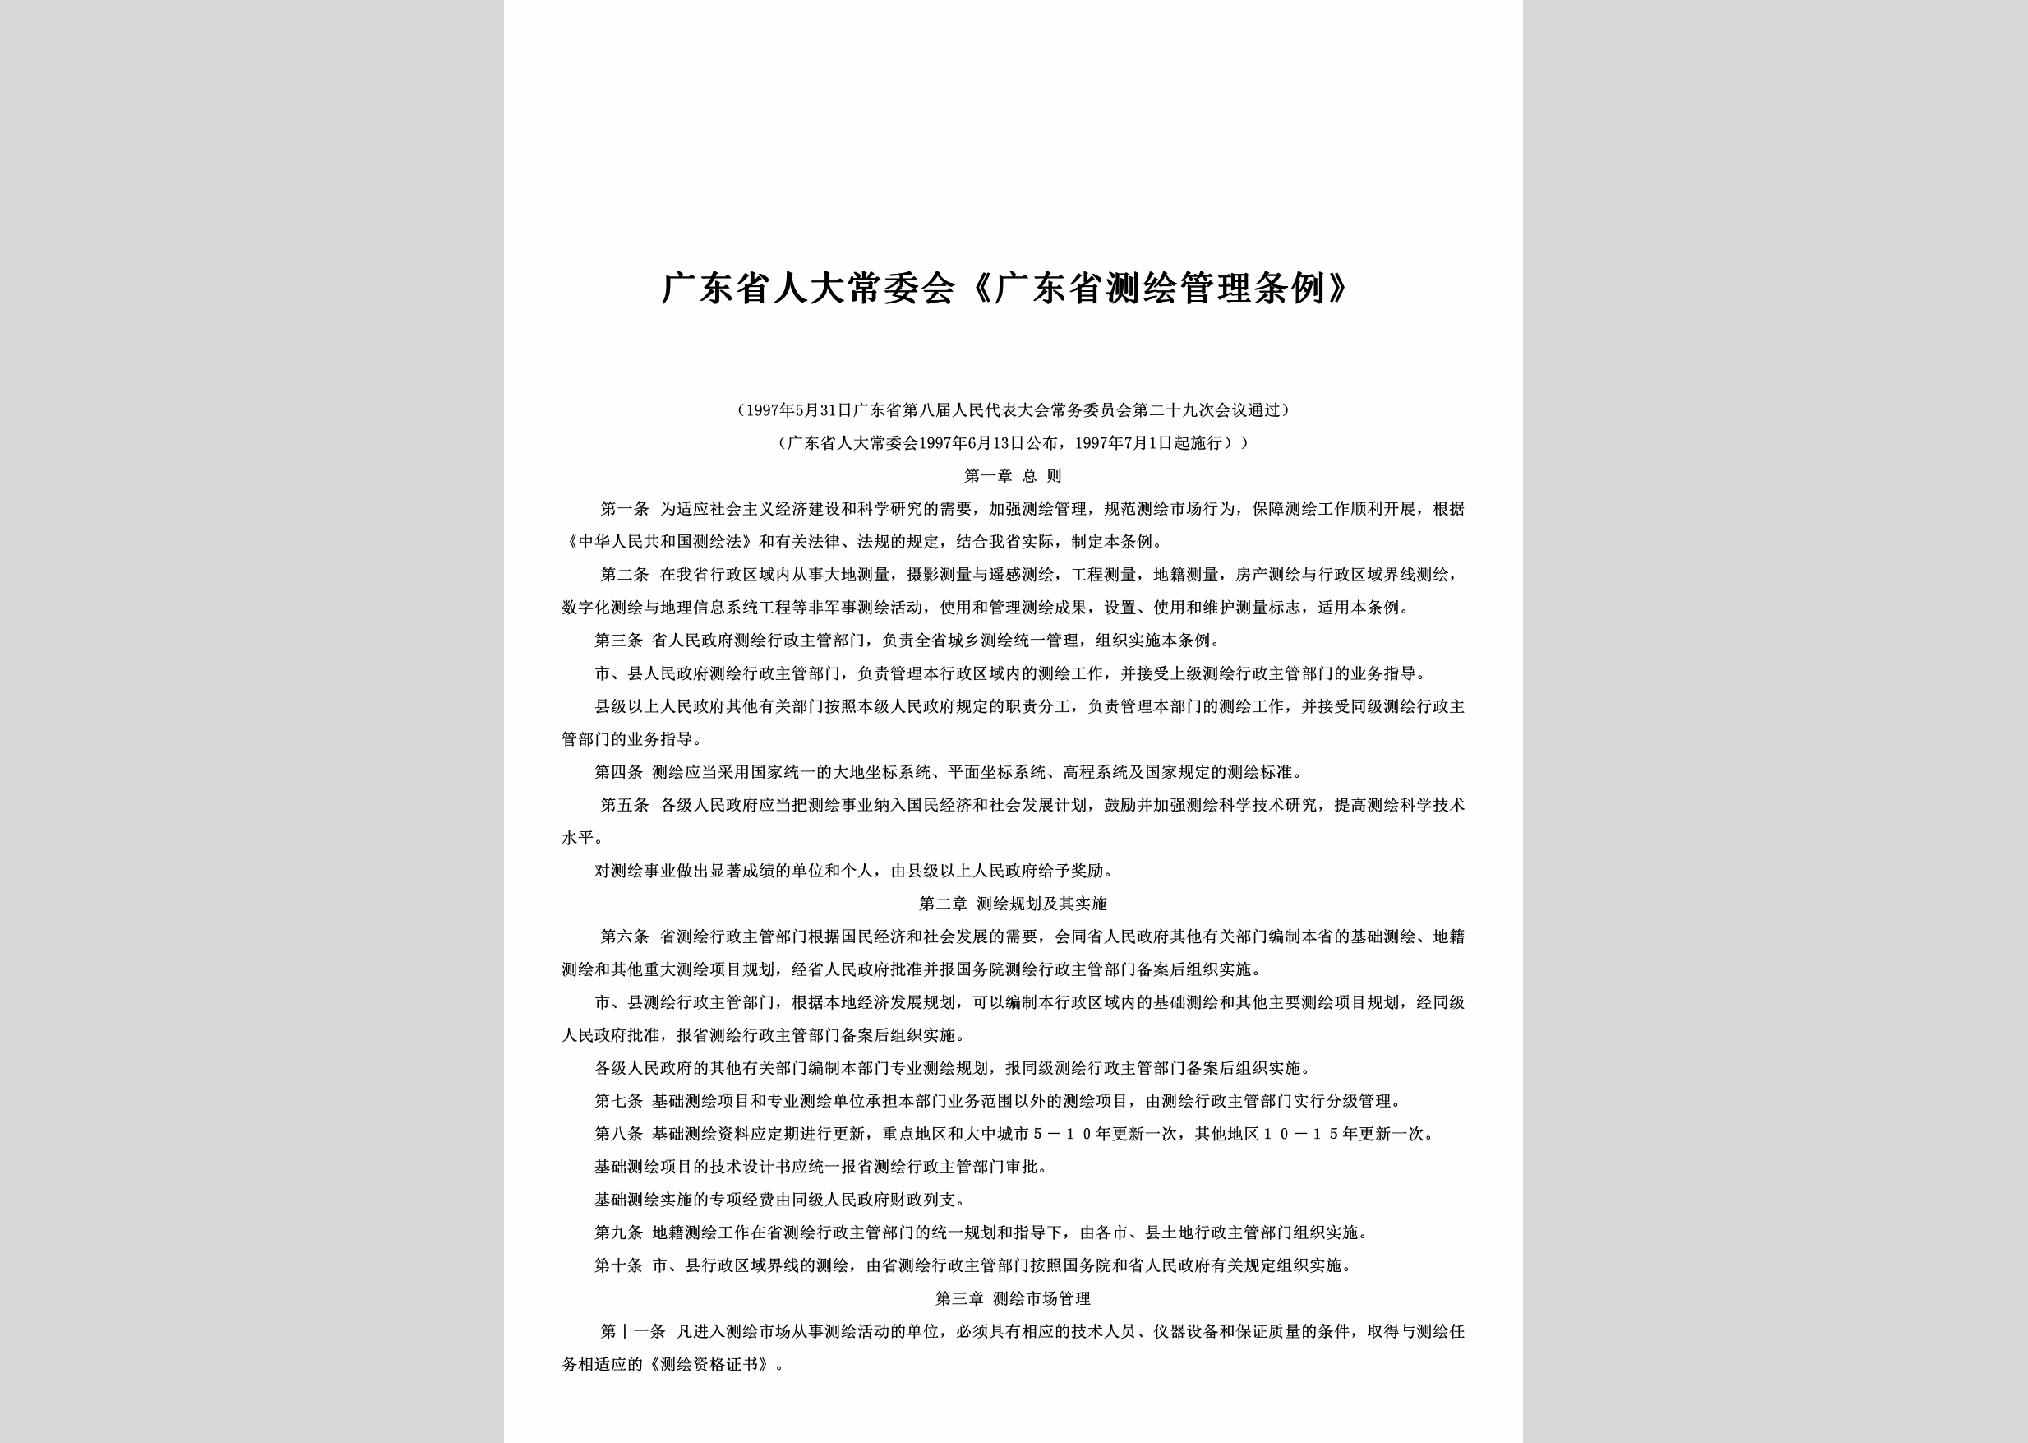 GD-CHGLTLL-1997：《广东省测绘管理条例》